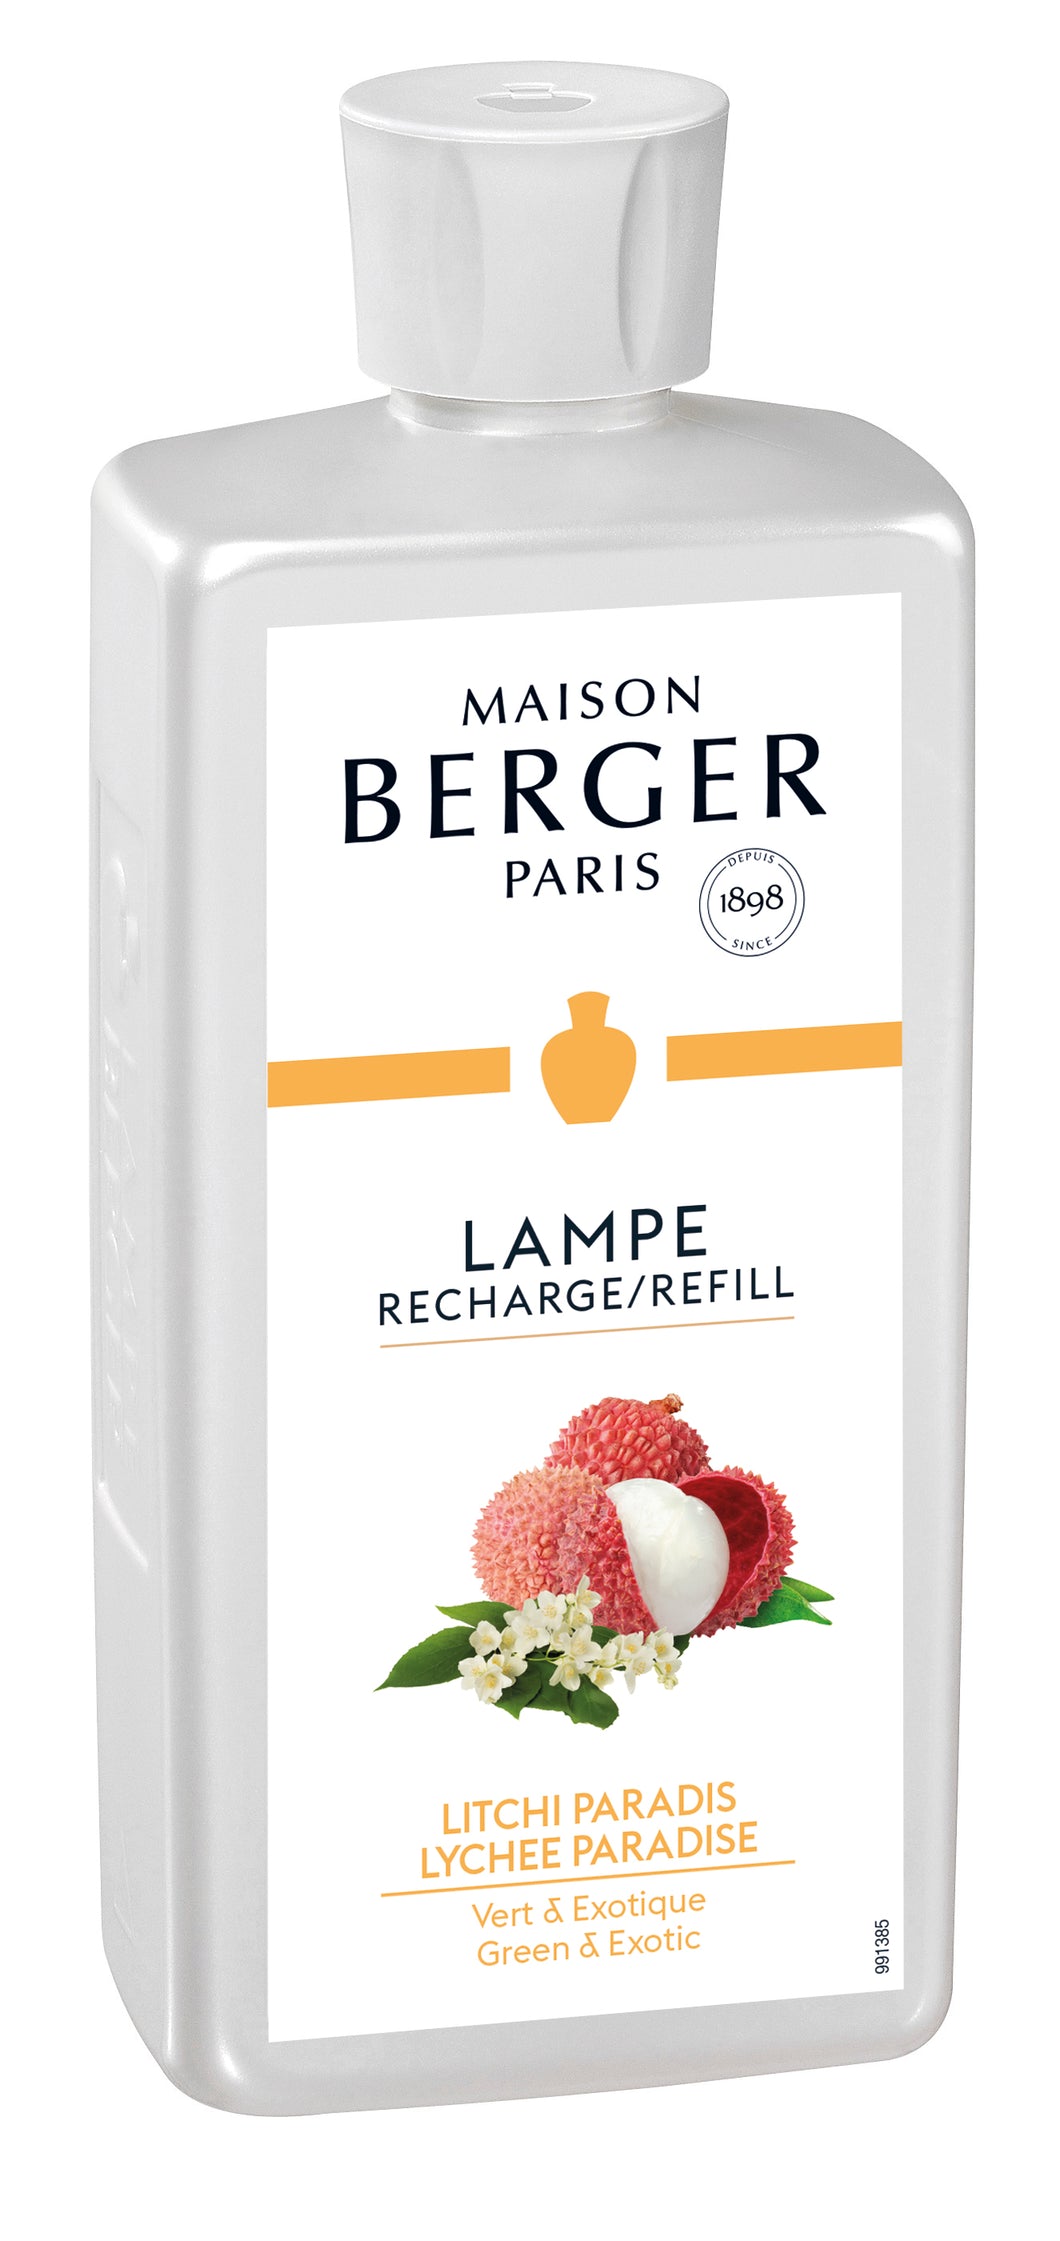 Lampe Berger Paris Maison Berger - Litchi Paradis 500 ml